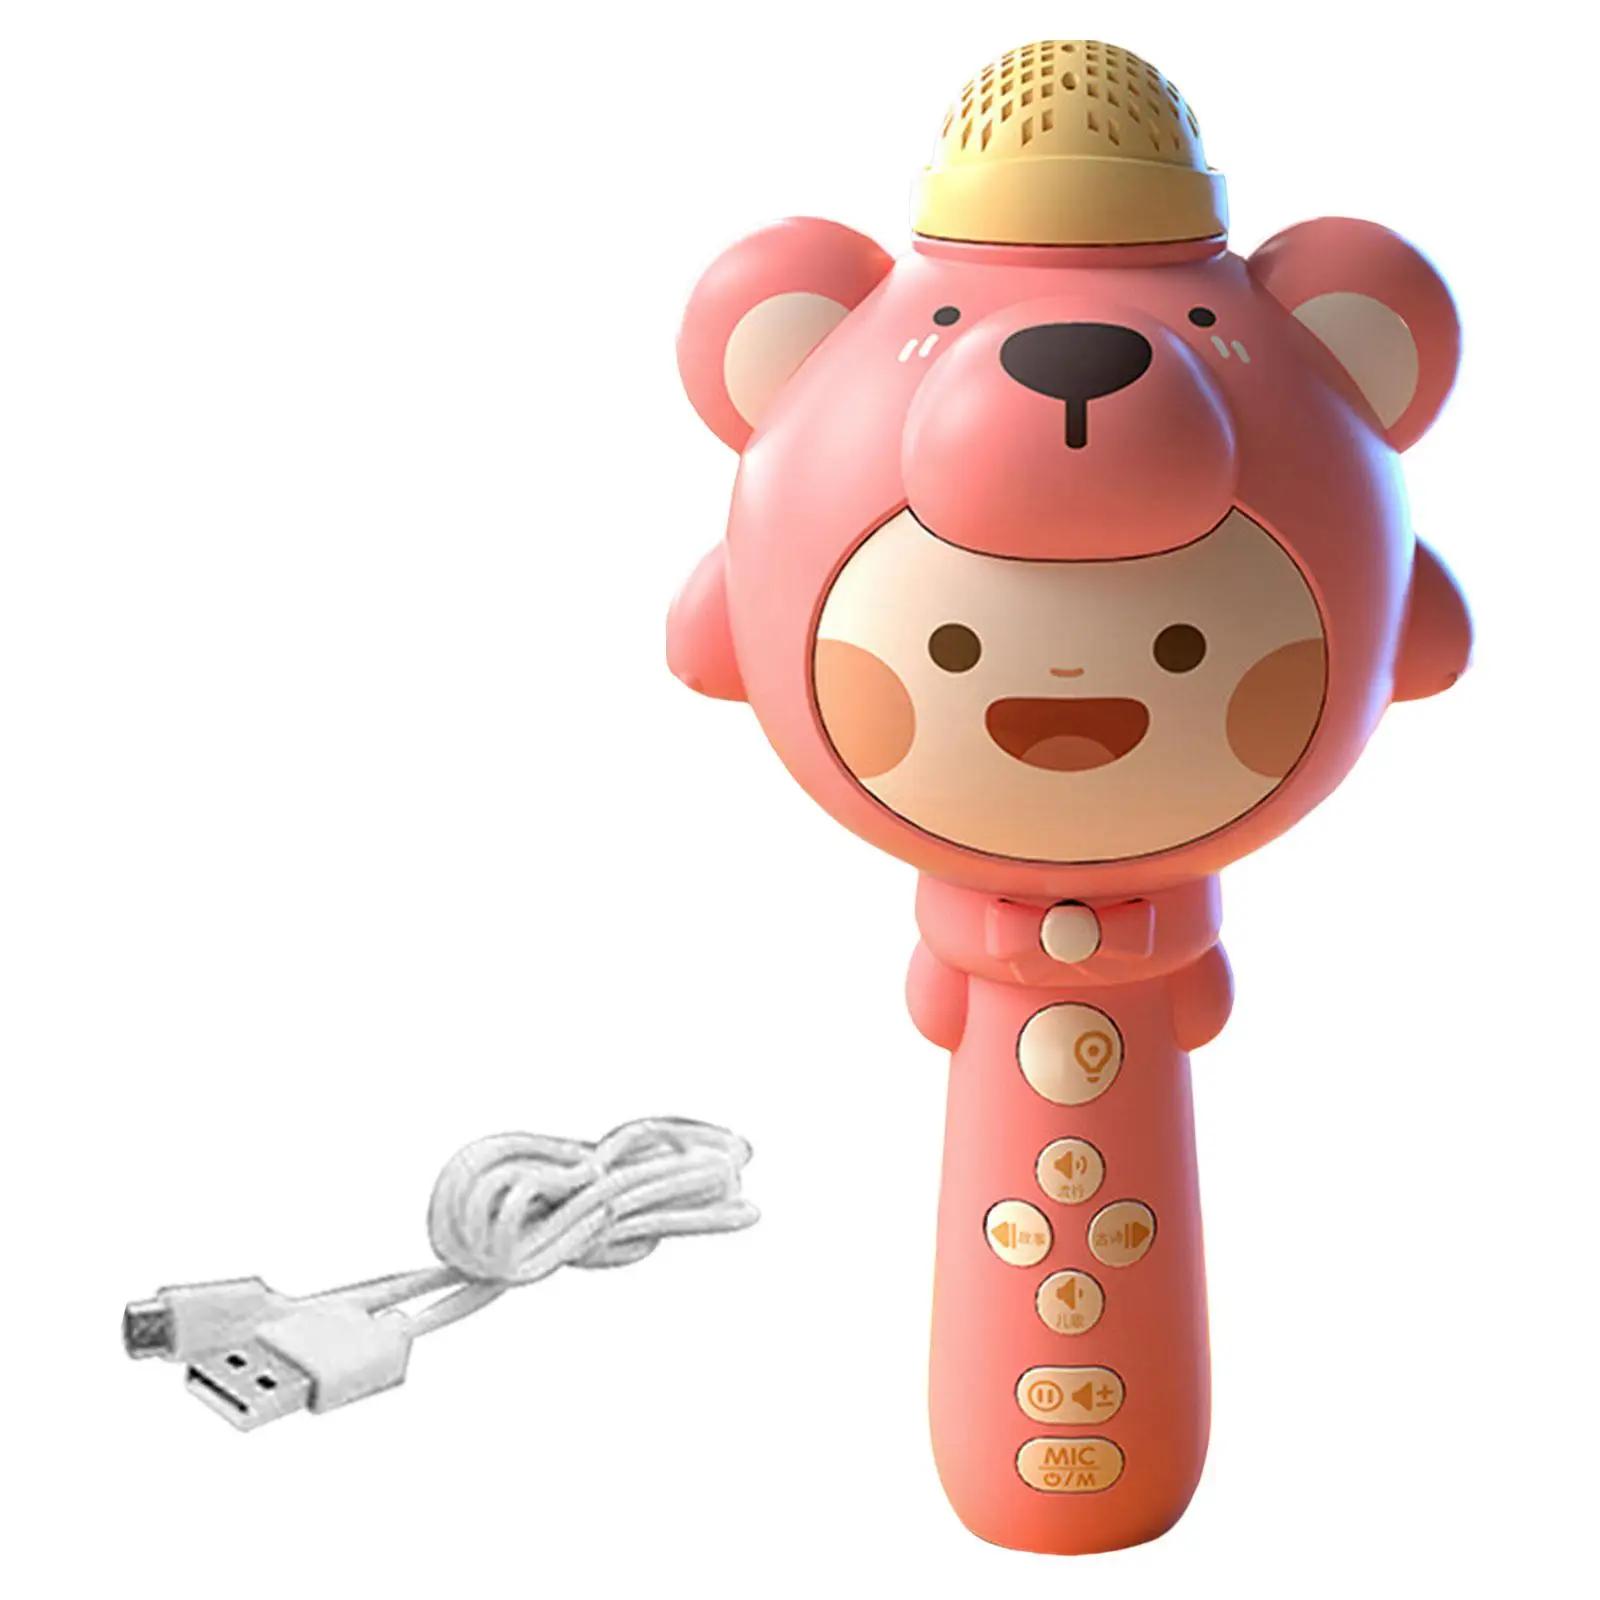 Handheld Mic Speaker Machine Dancing LED Karaoke Mic Speaker Singing Microphone for Party Home Children Girls Boys Toy Adults